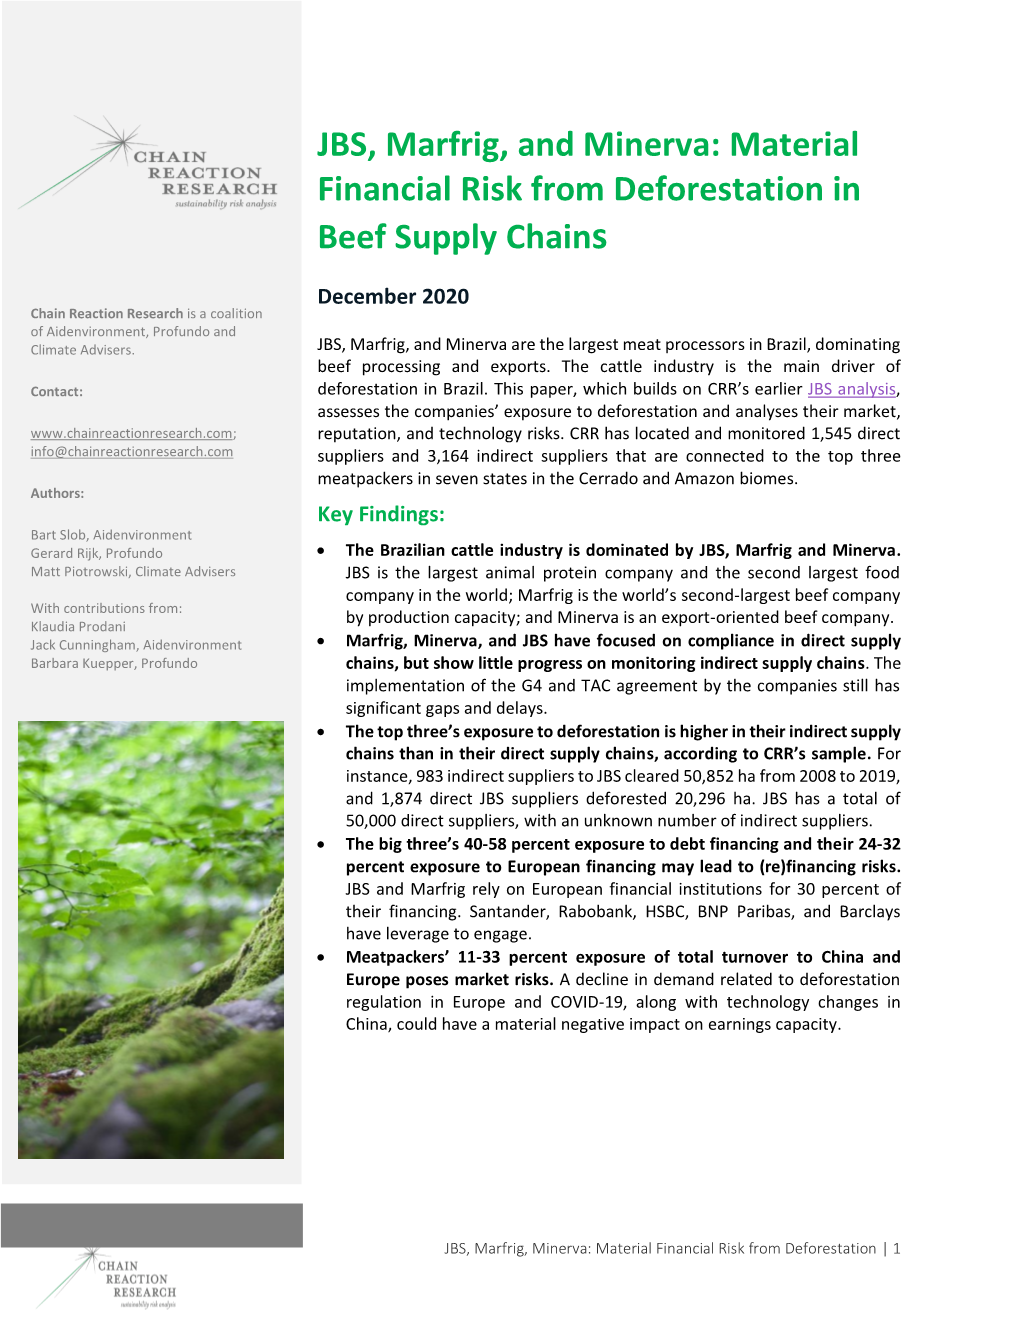 JBS, Marfrig, and Minerva: Material Risk from Deforestation in Beef